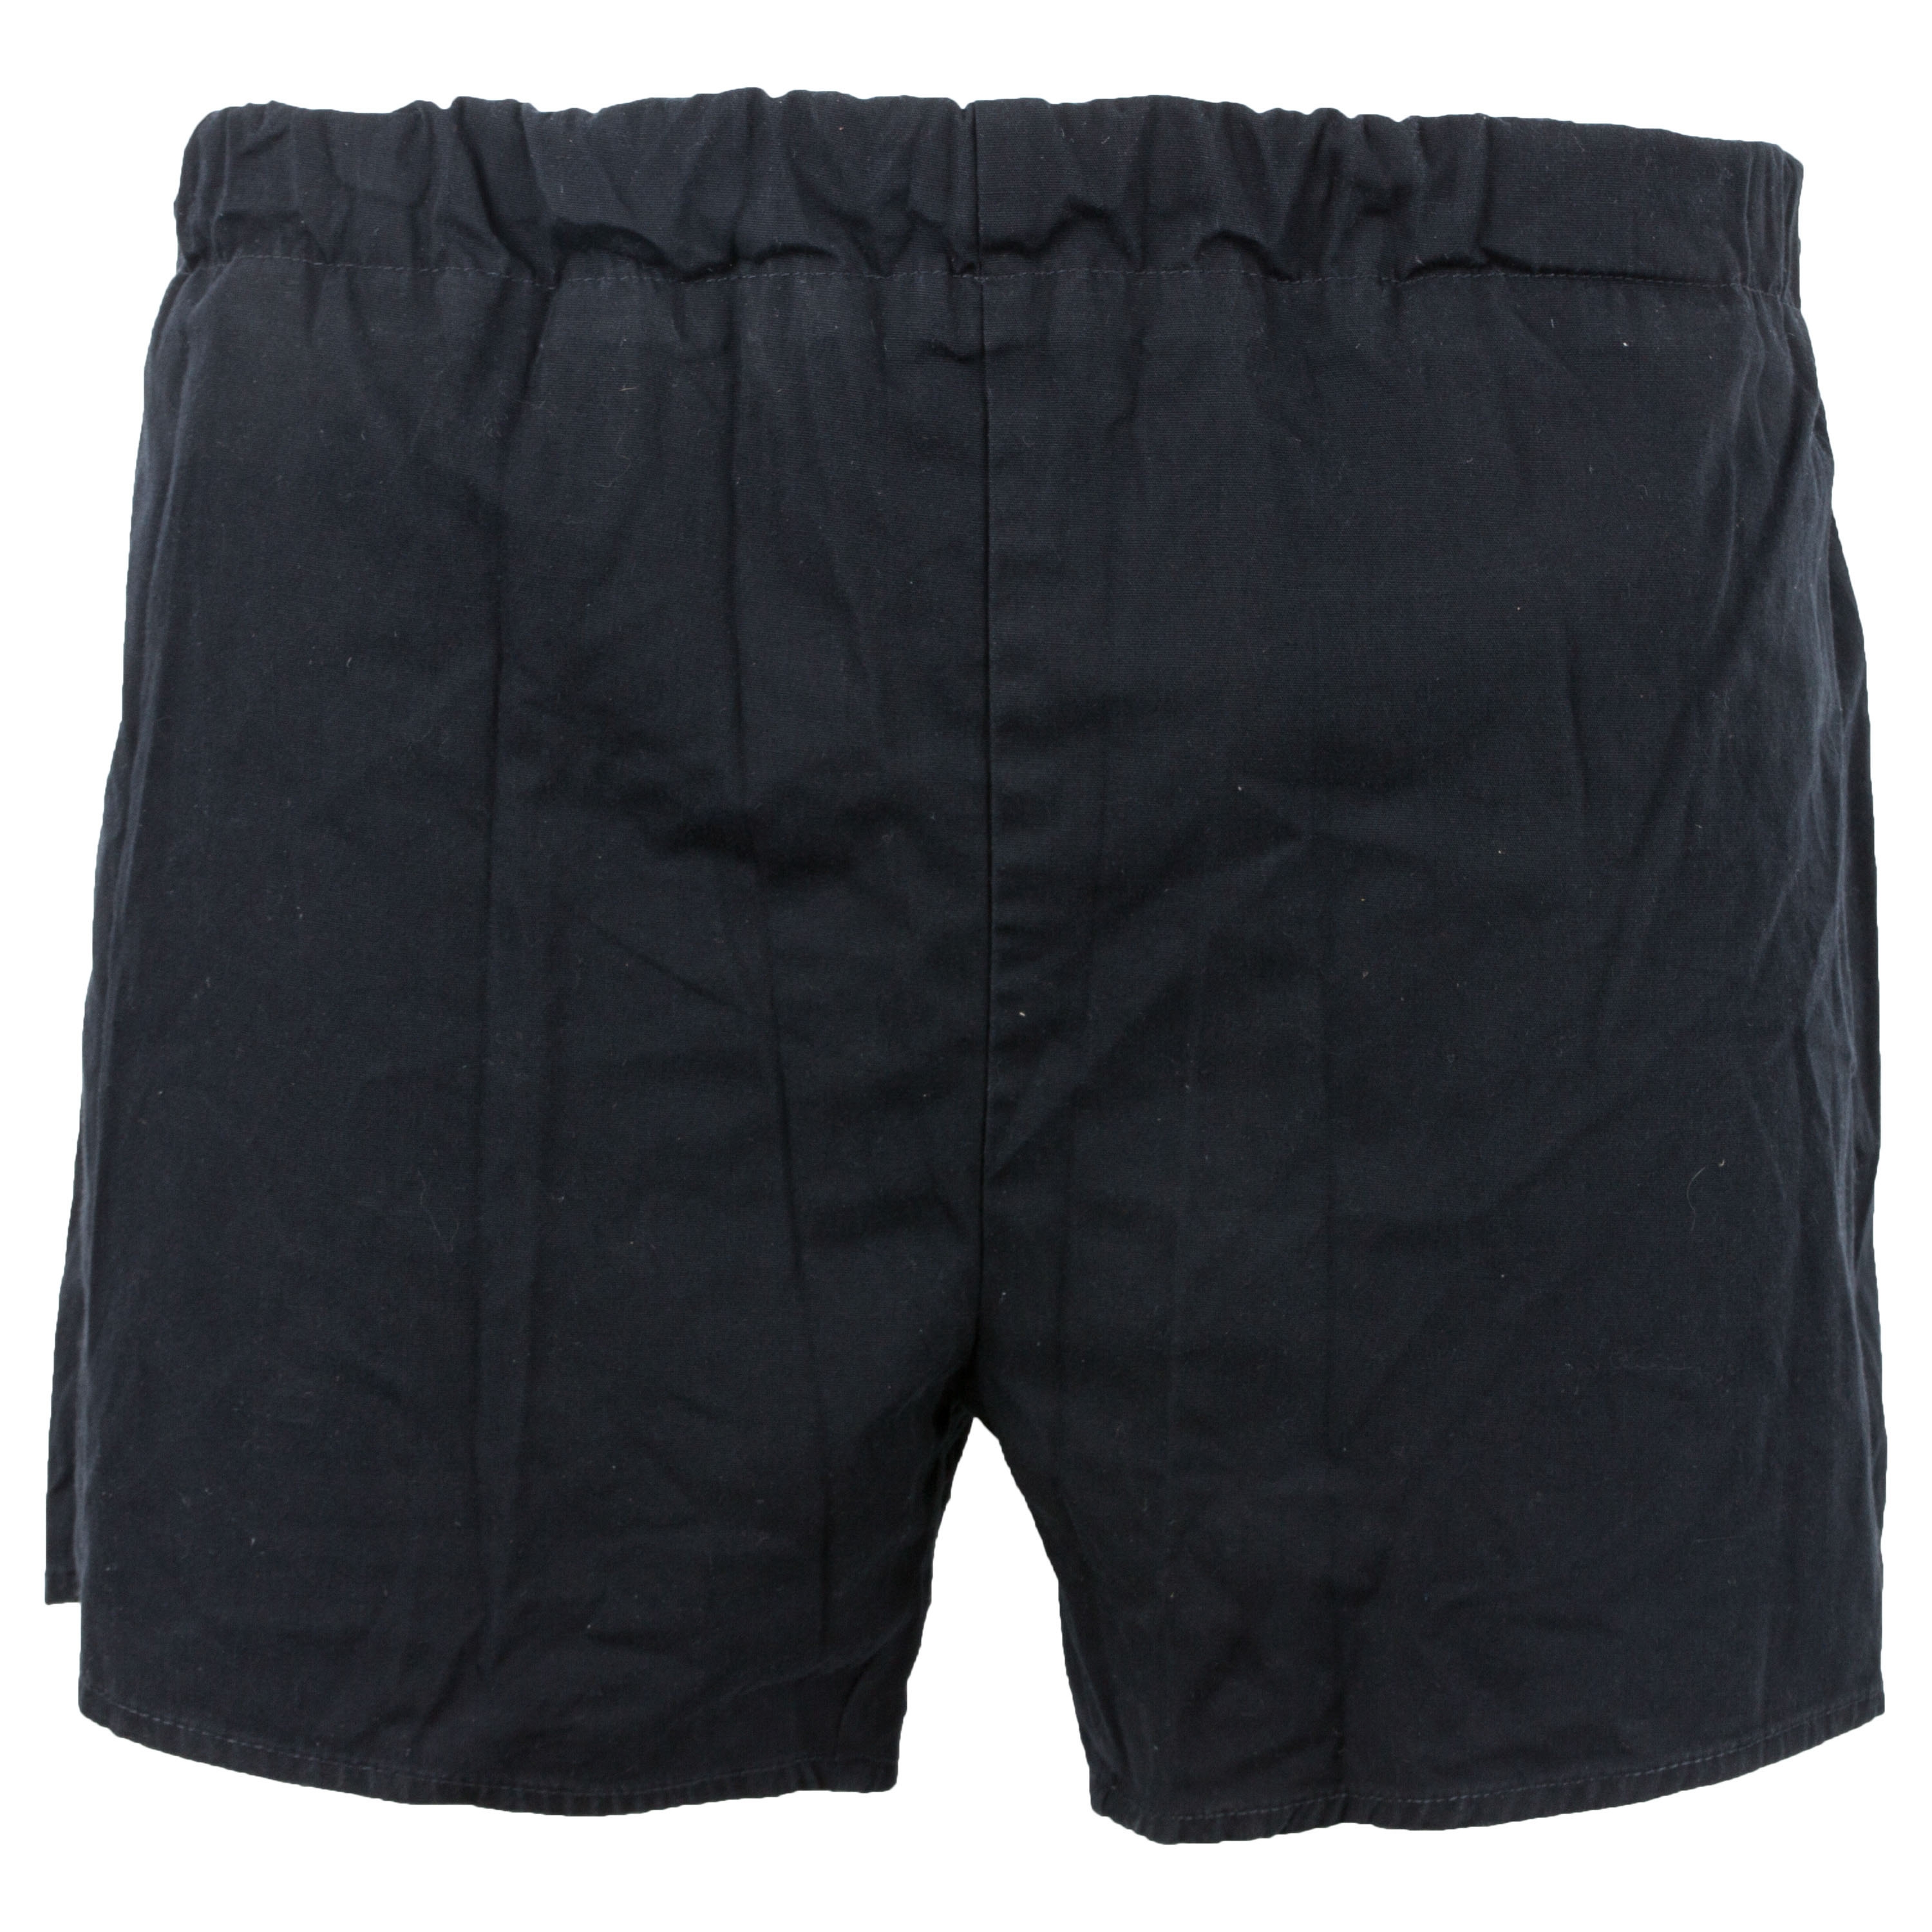 British Sport Shorts Used black